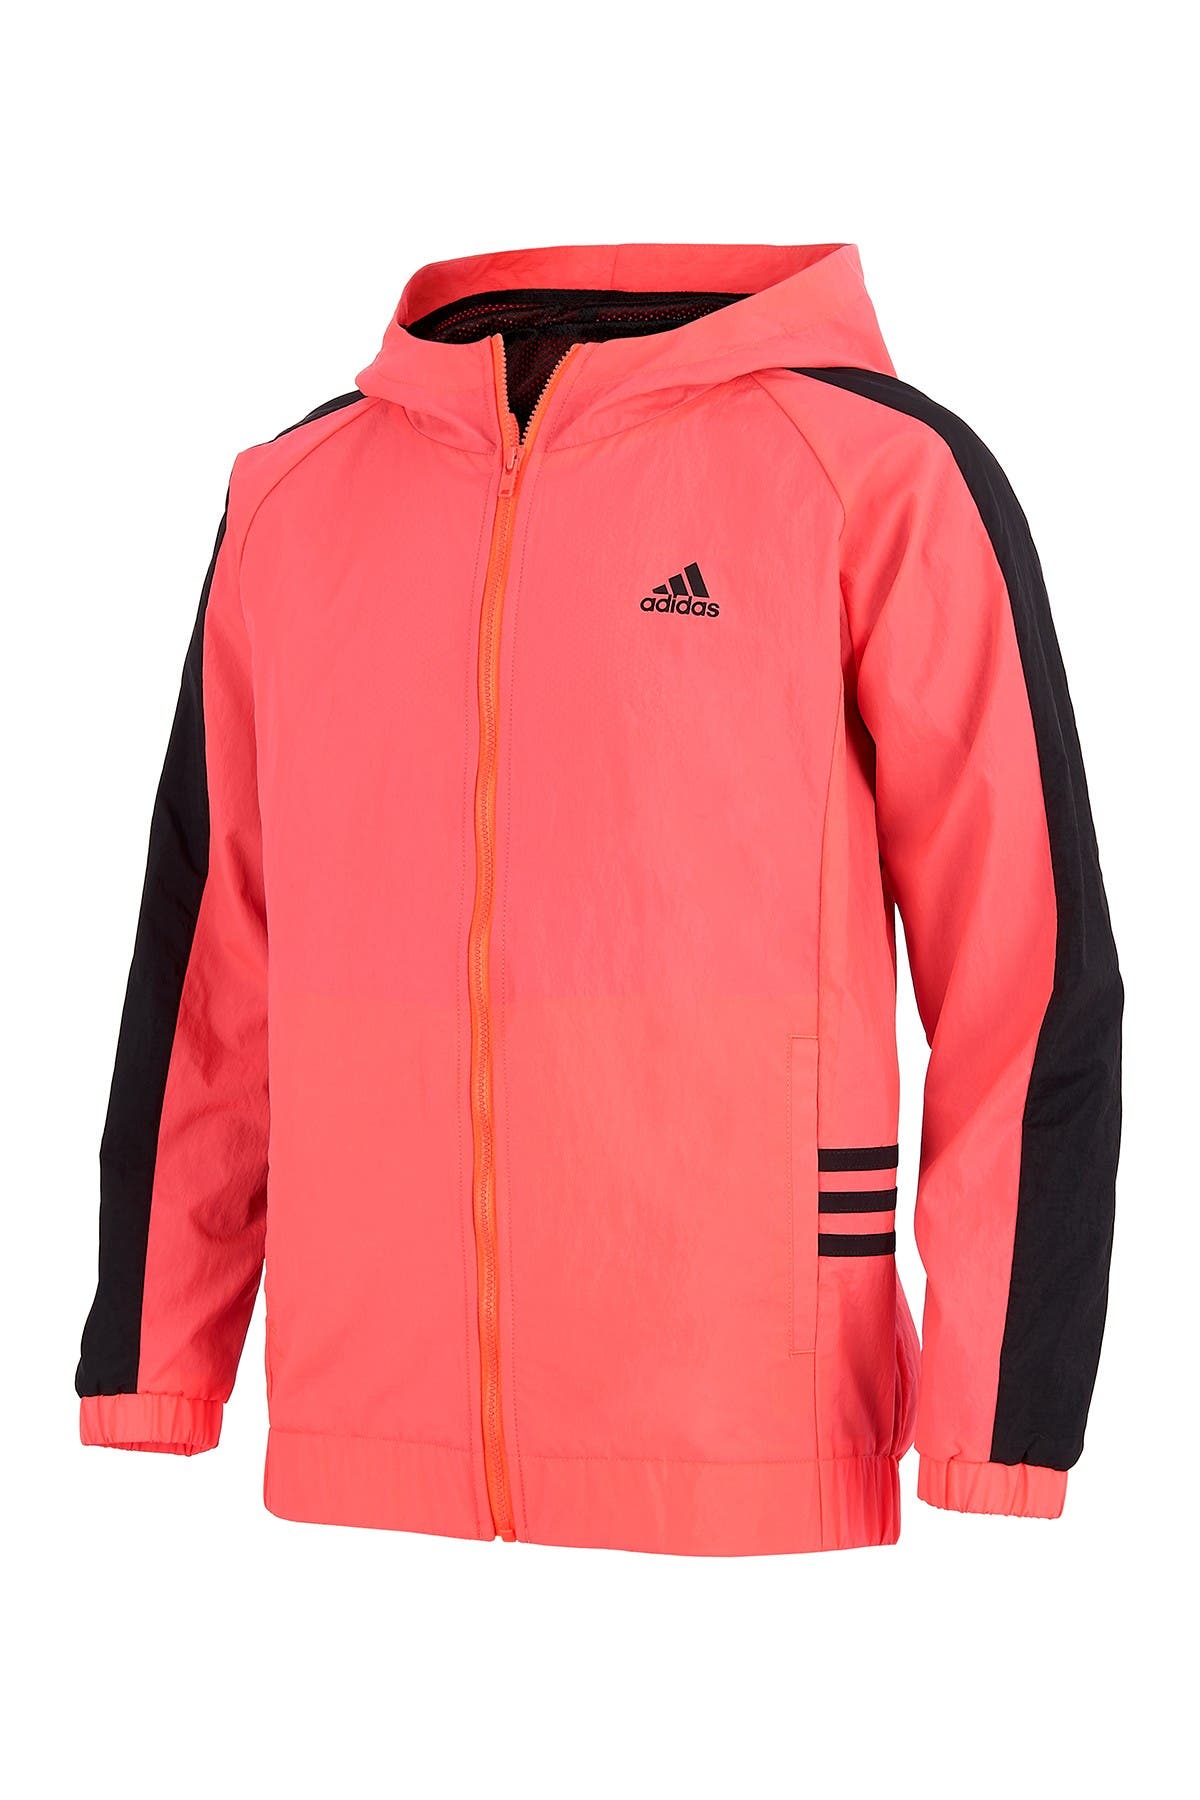 adidas wind fleece jacket